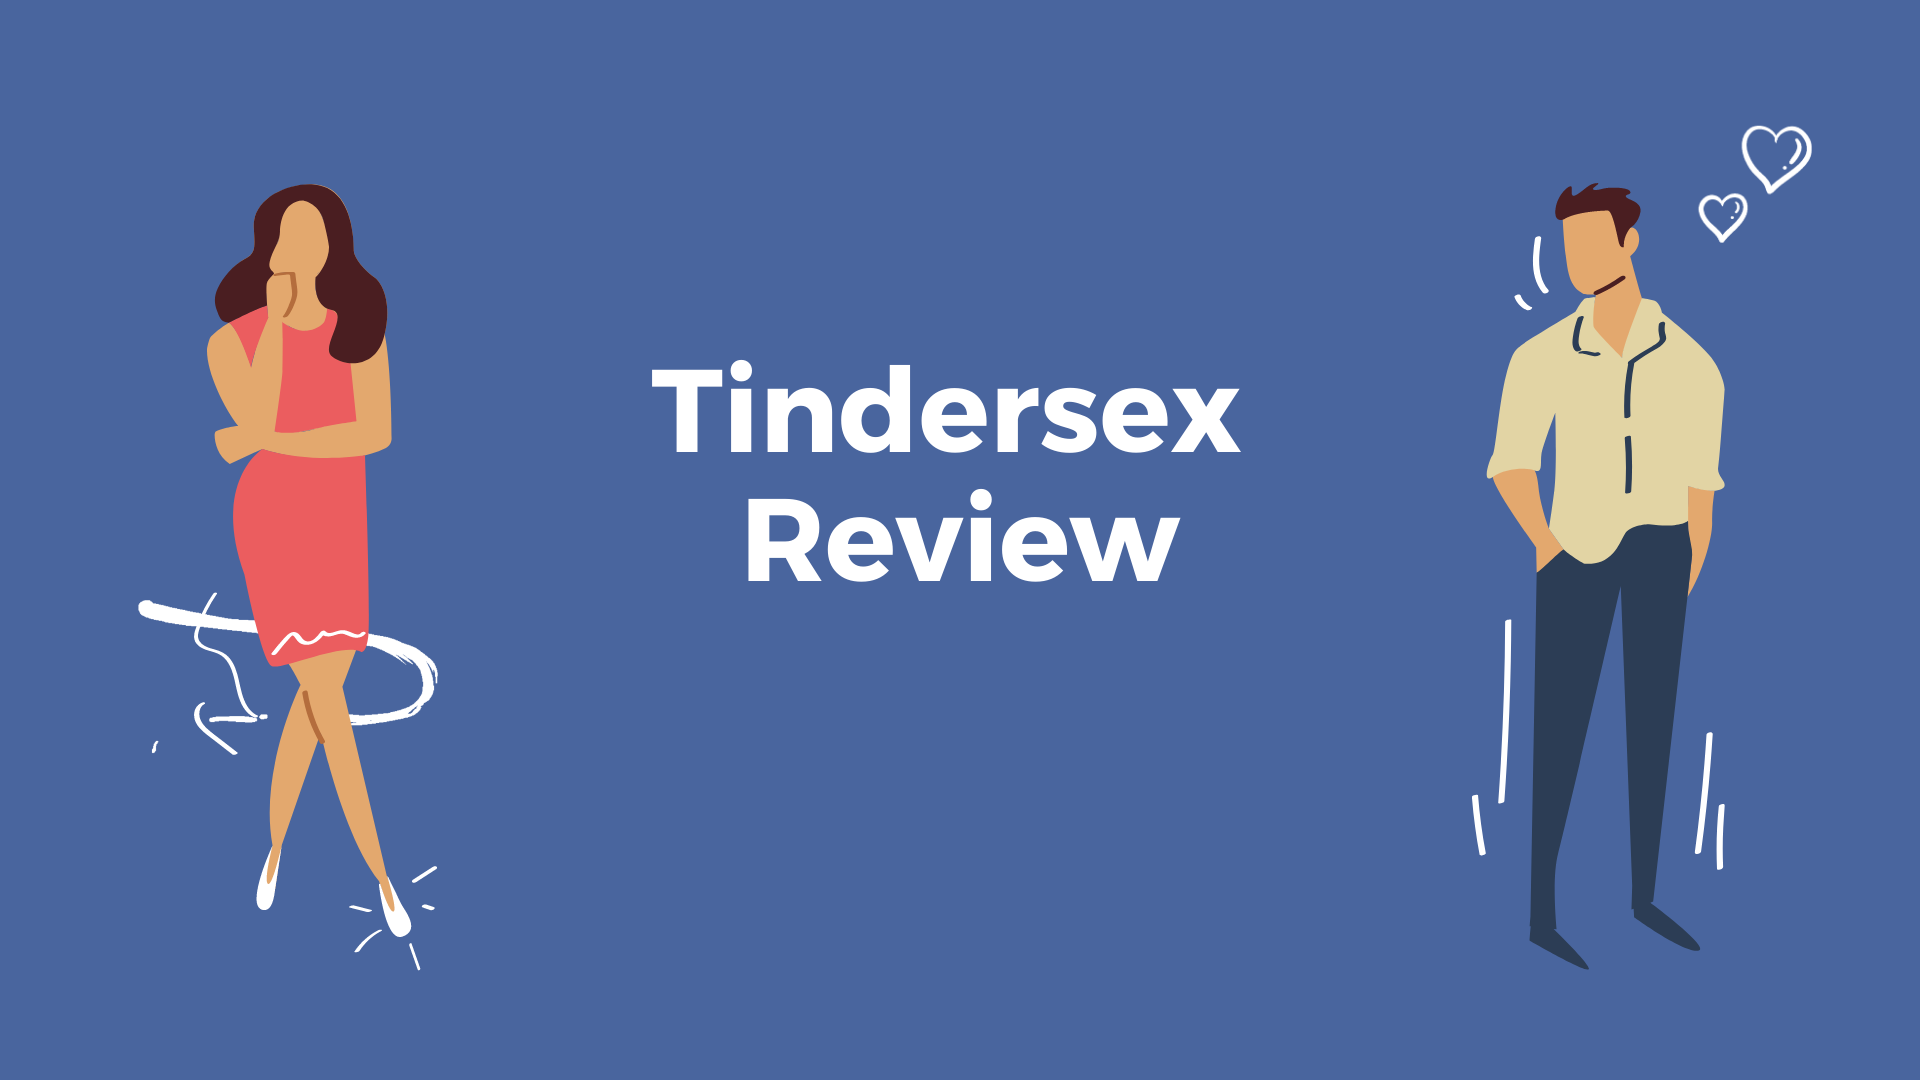 Tindersex review